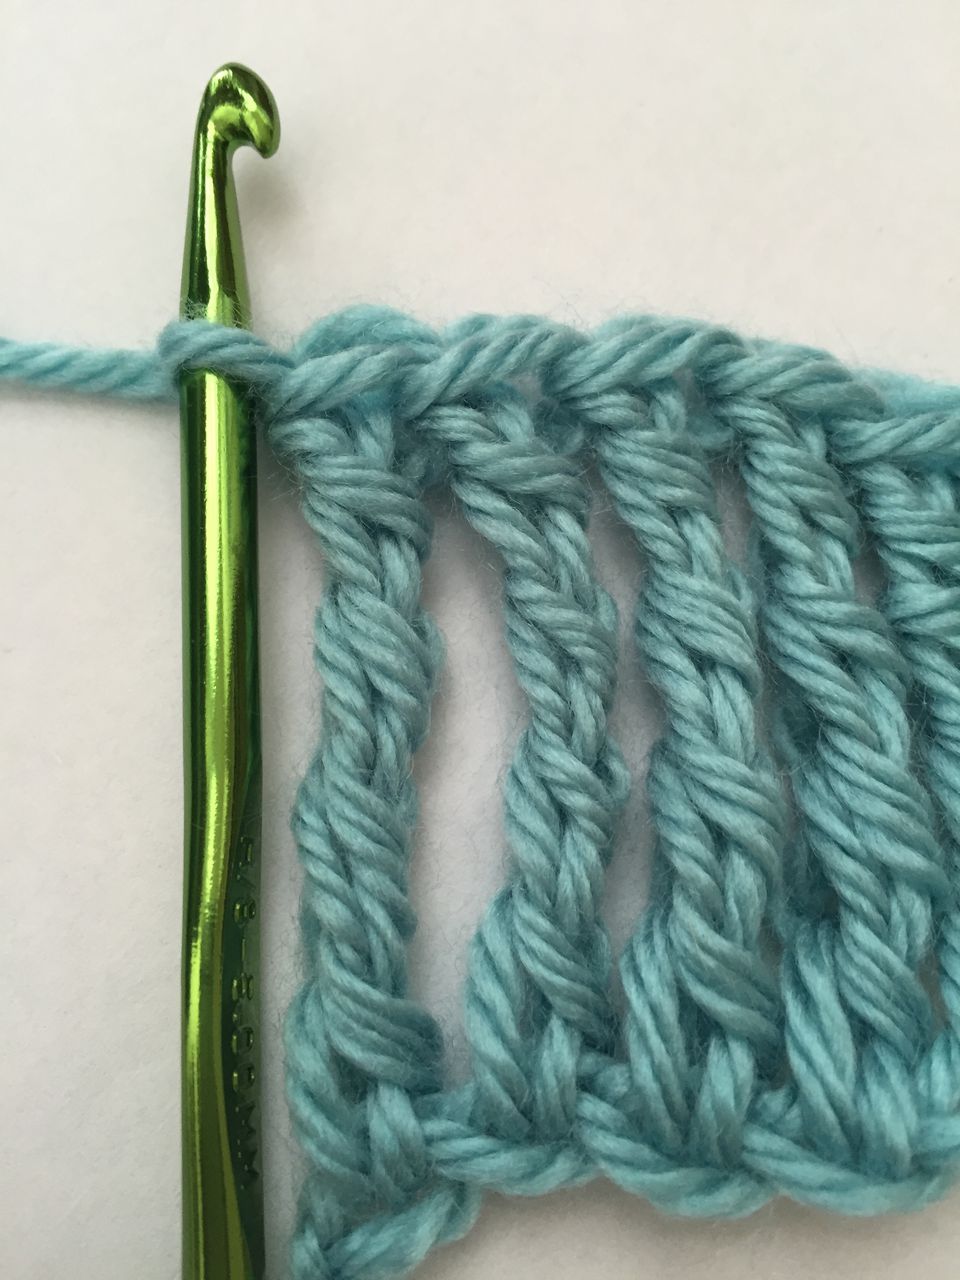 How to Crochet a Triple Treble Stitch (TrTr)